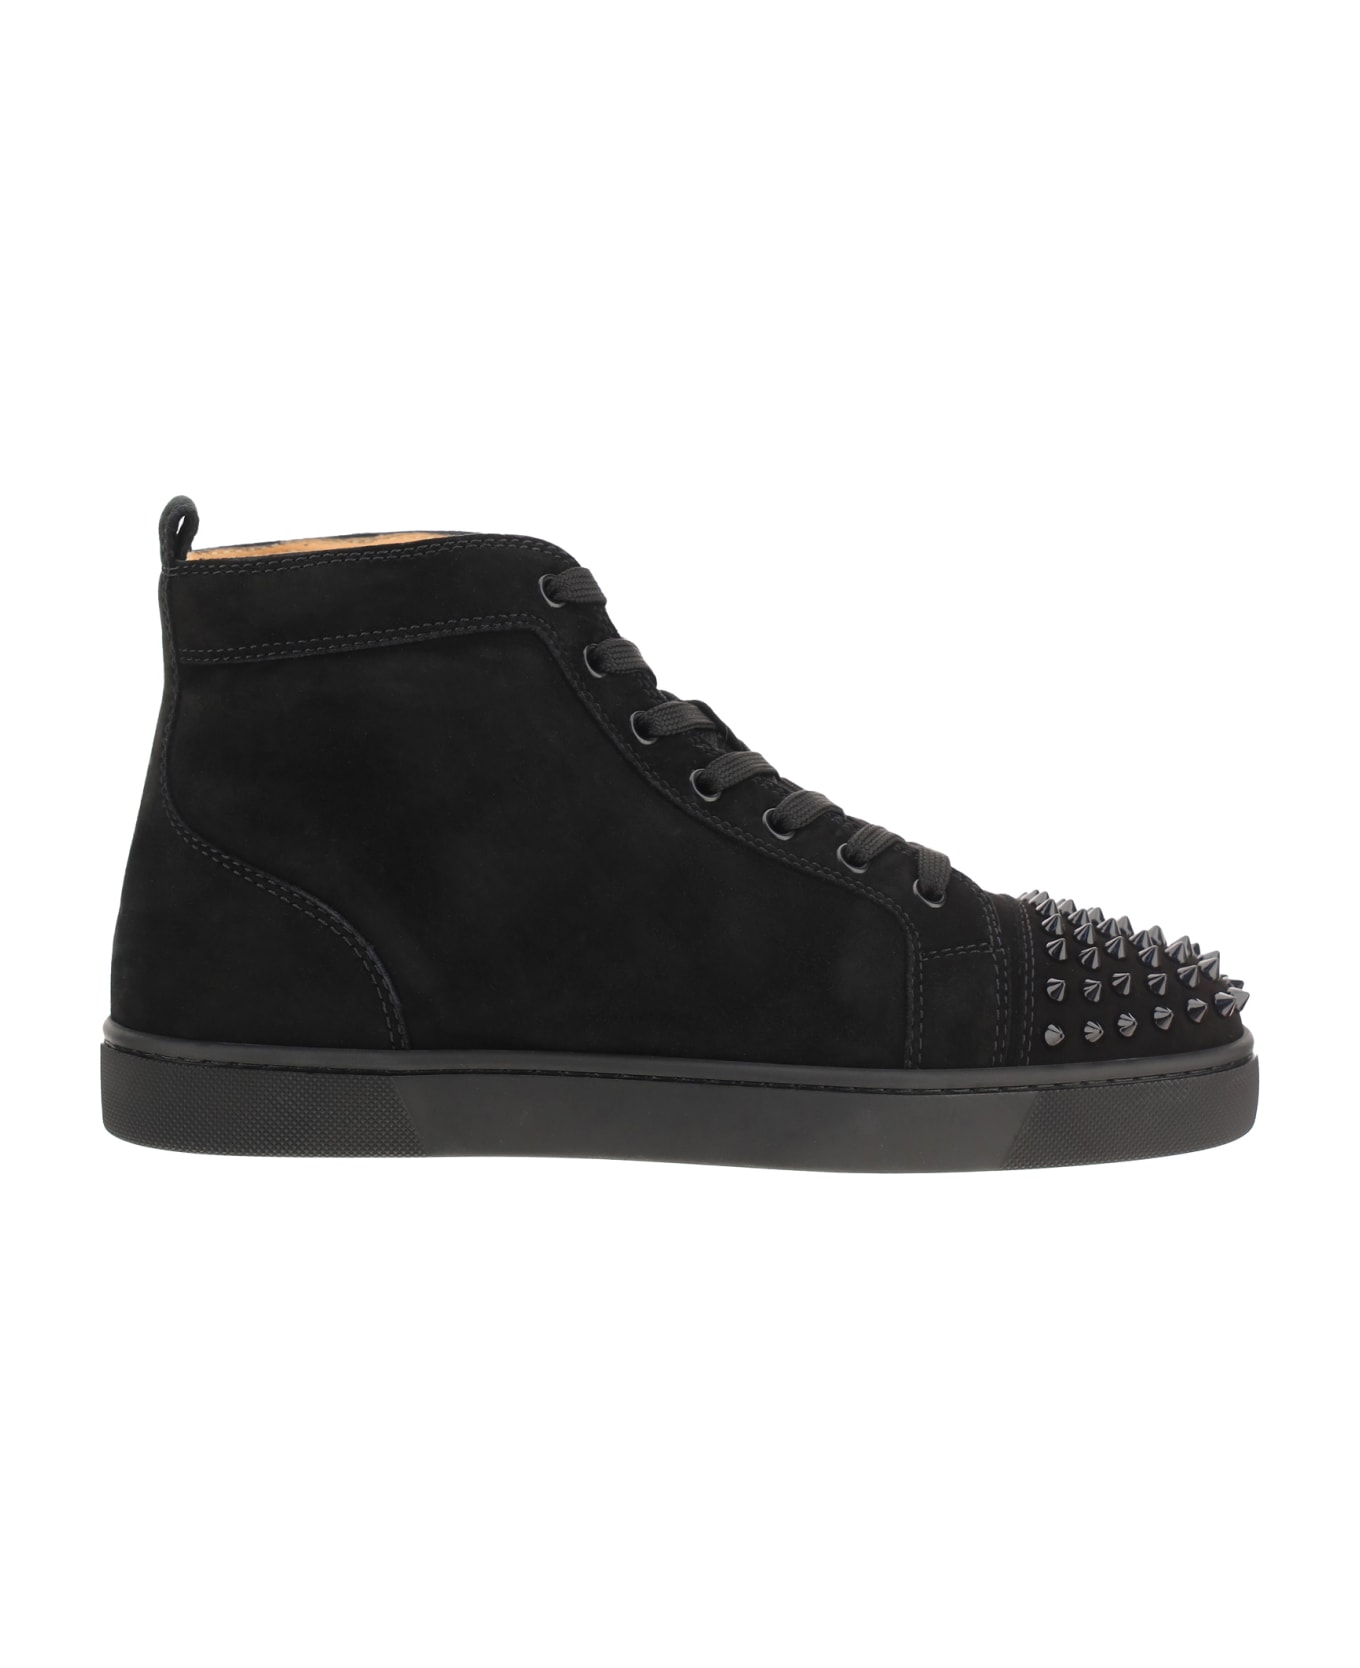 Christian Louboutin Lou Spikes Sneakers - Black/black/bk スニーカー